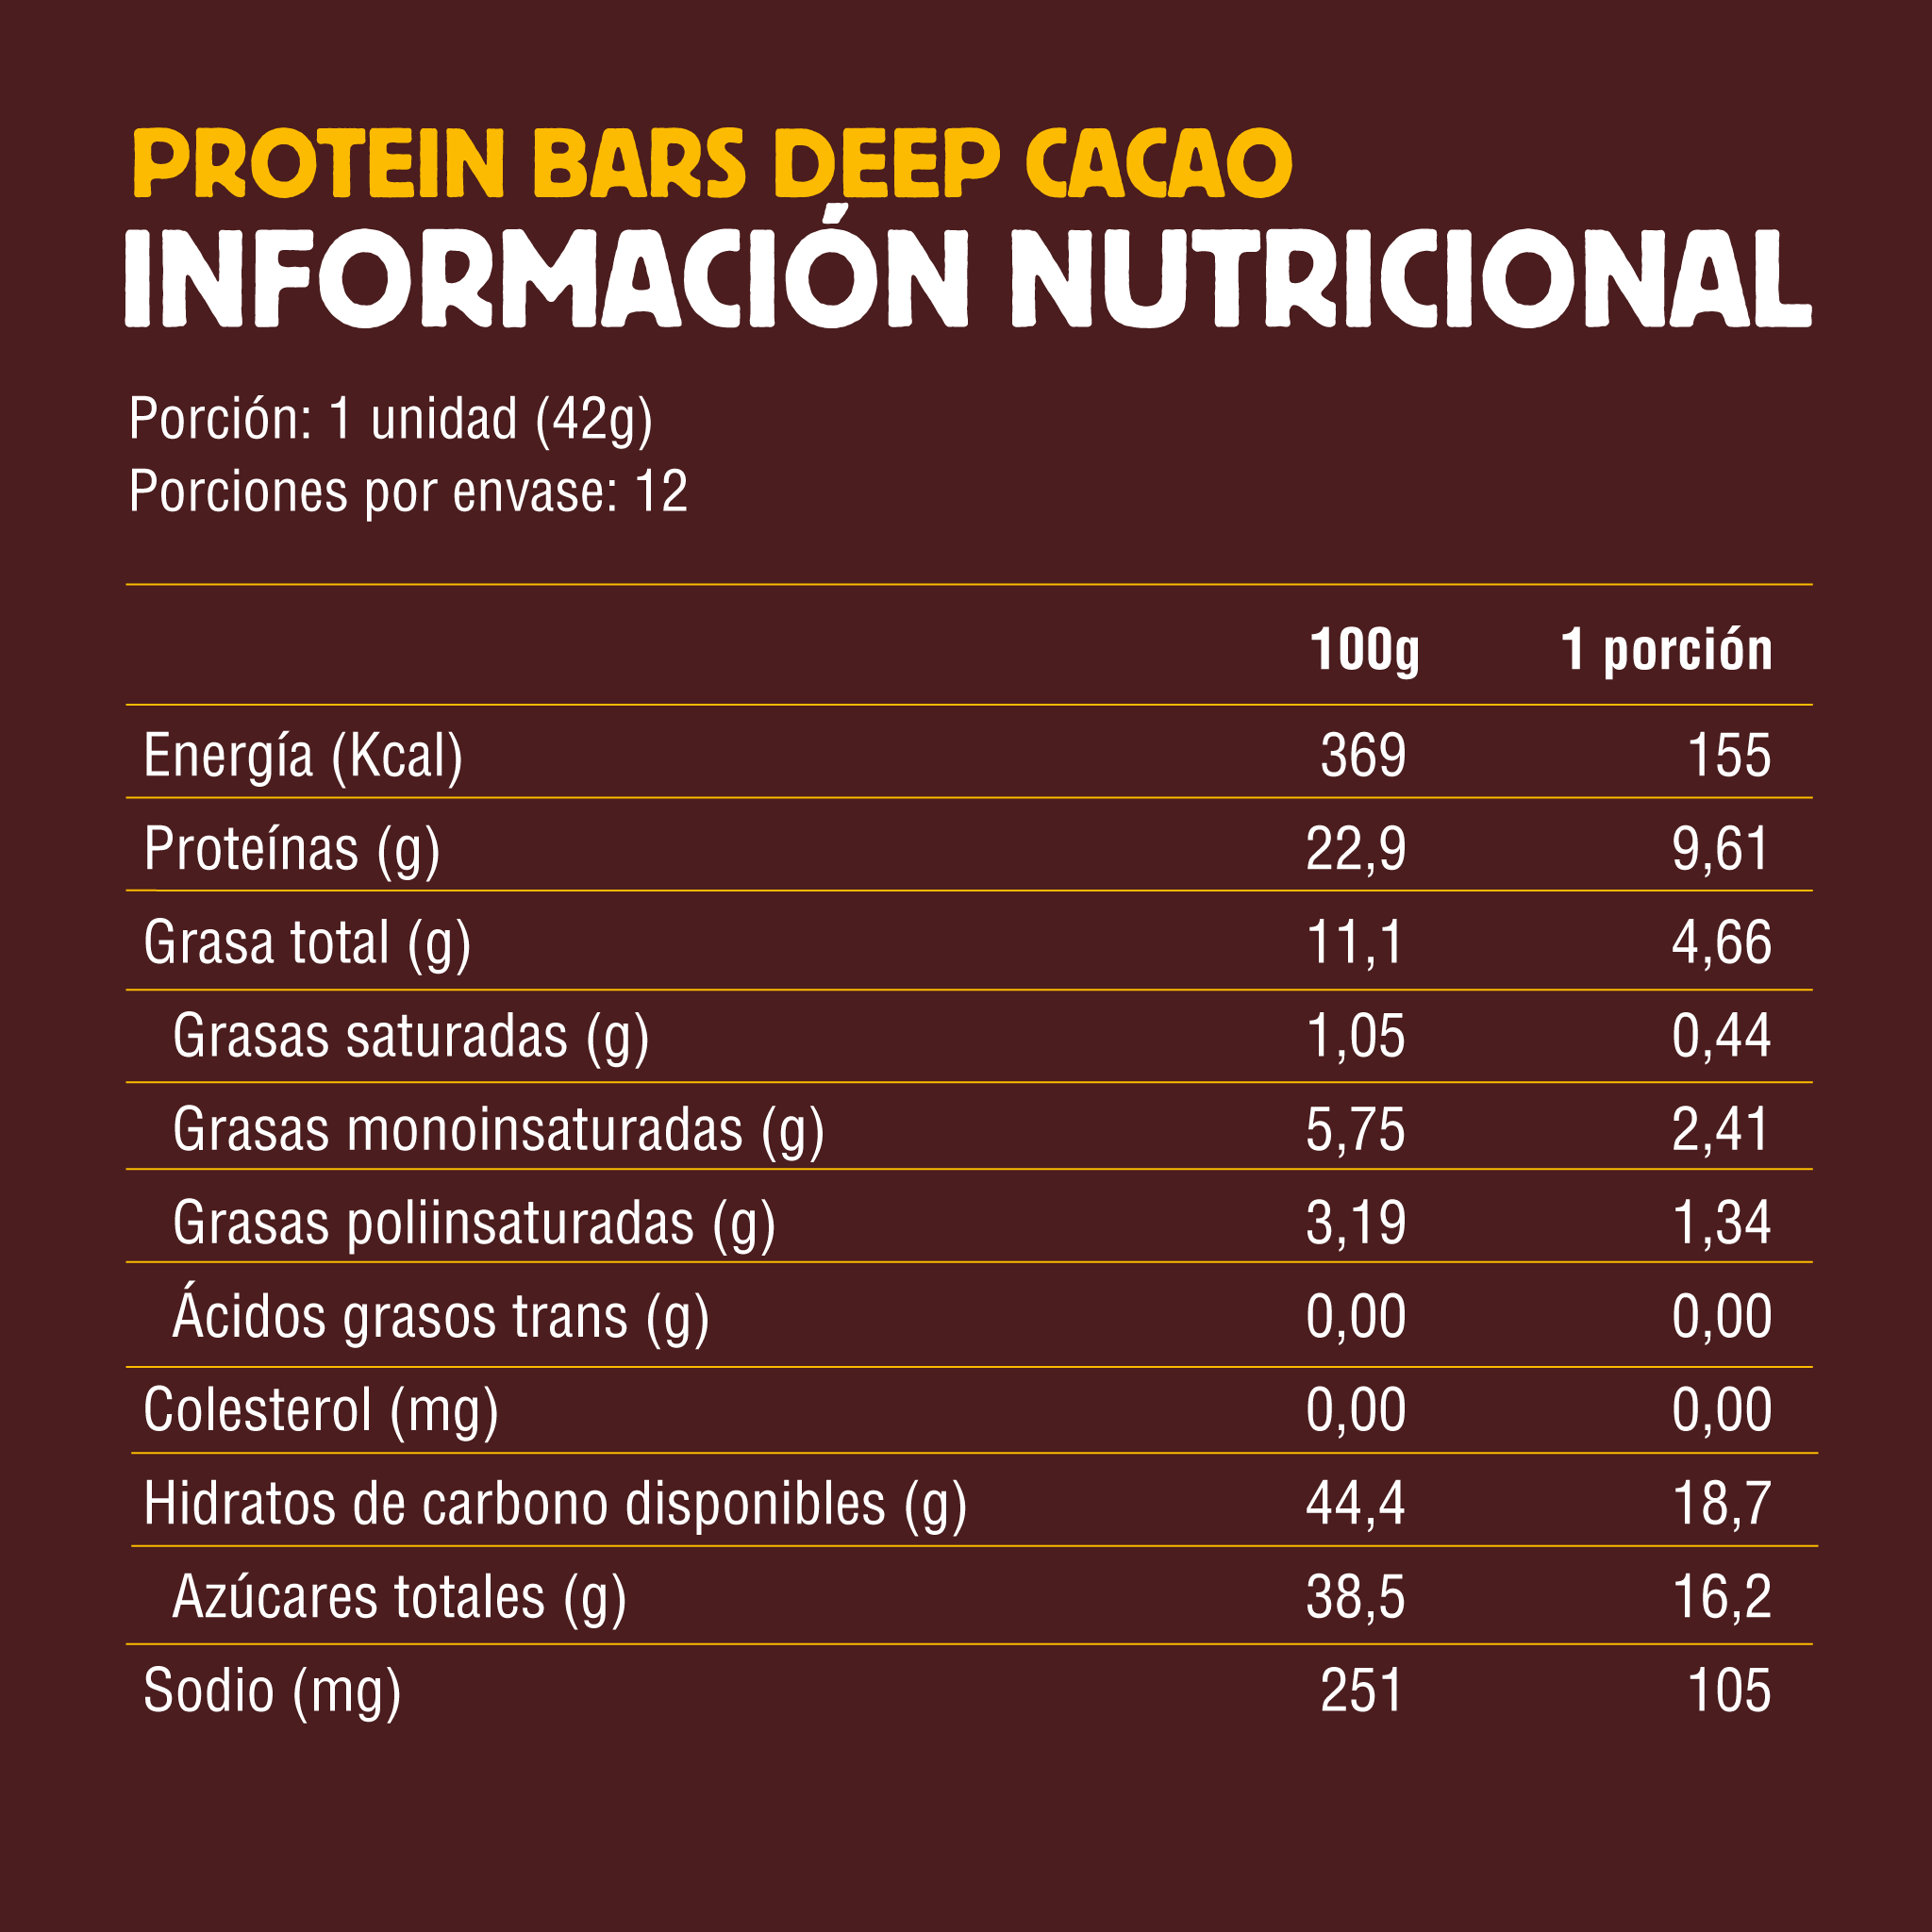 Fair Foods Protein Bar Deep Cacao 12 un